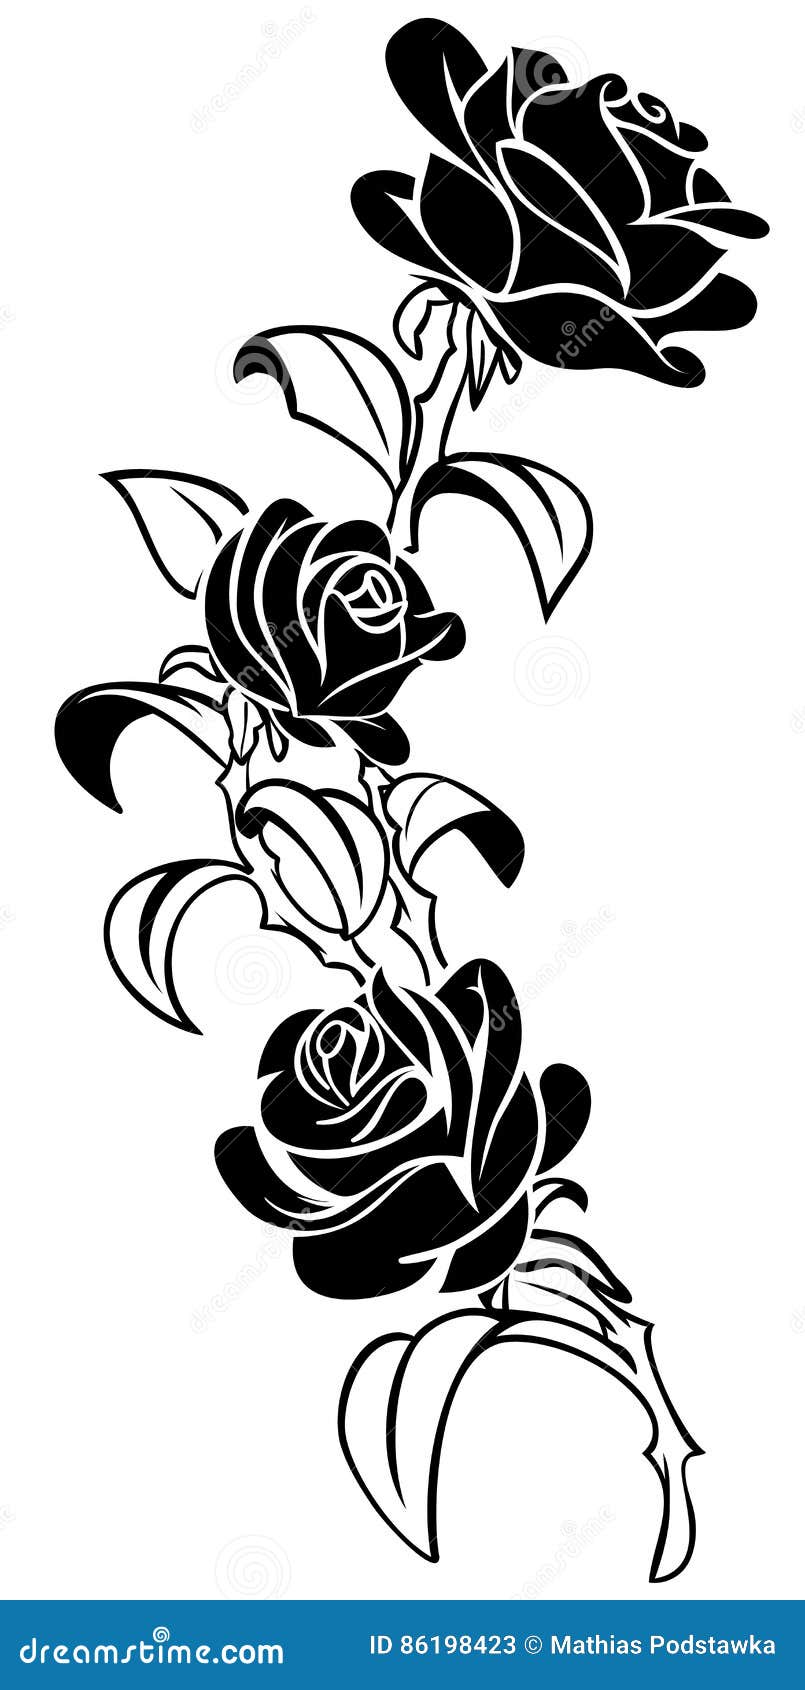 Black Rose Tattoo | InkStyleMag